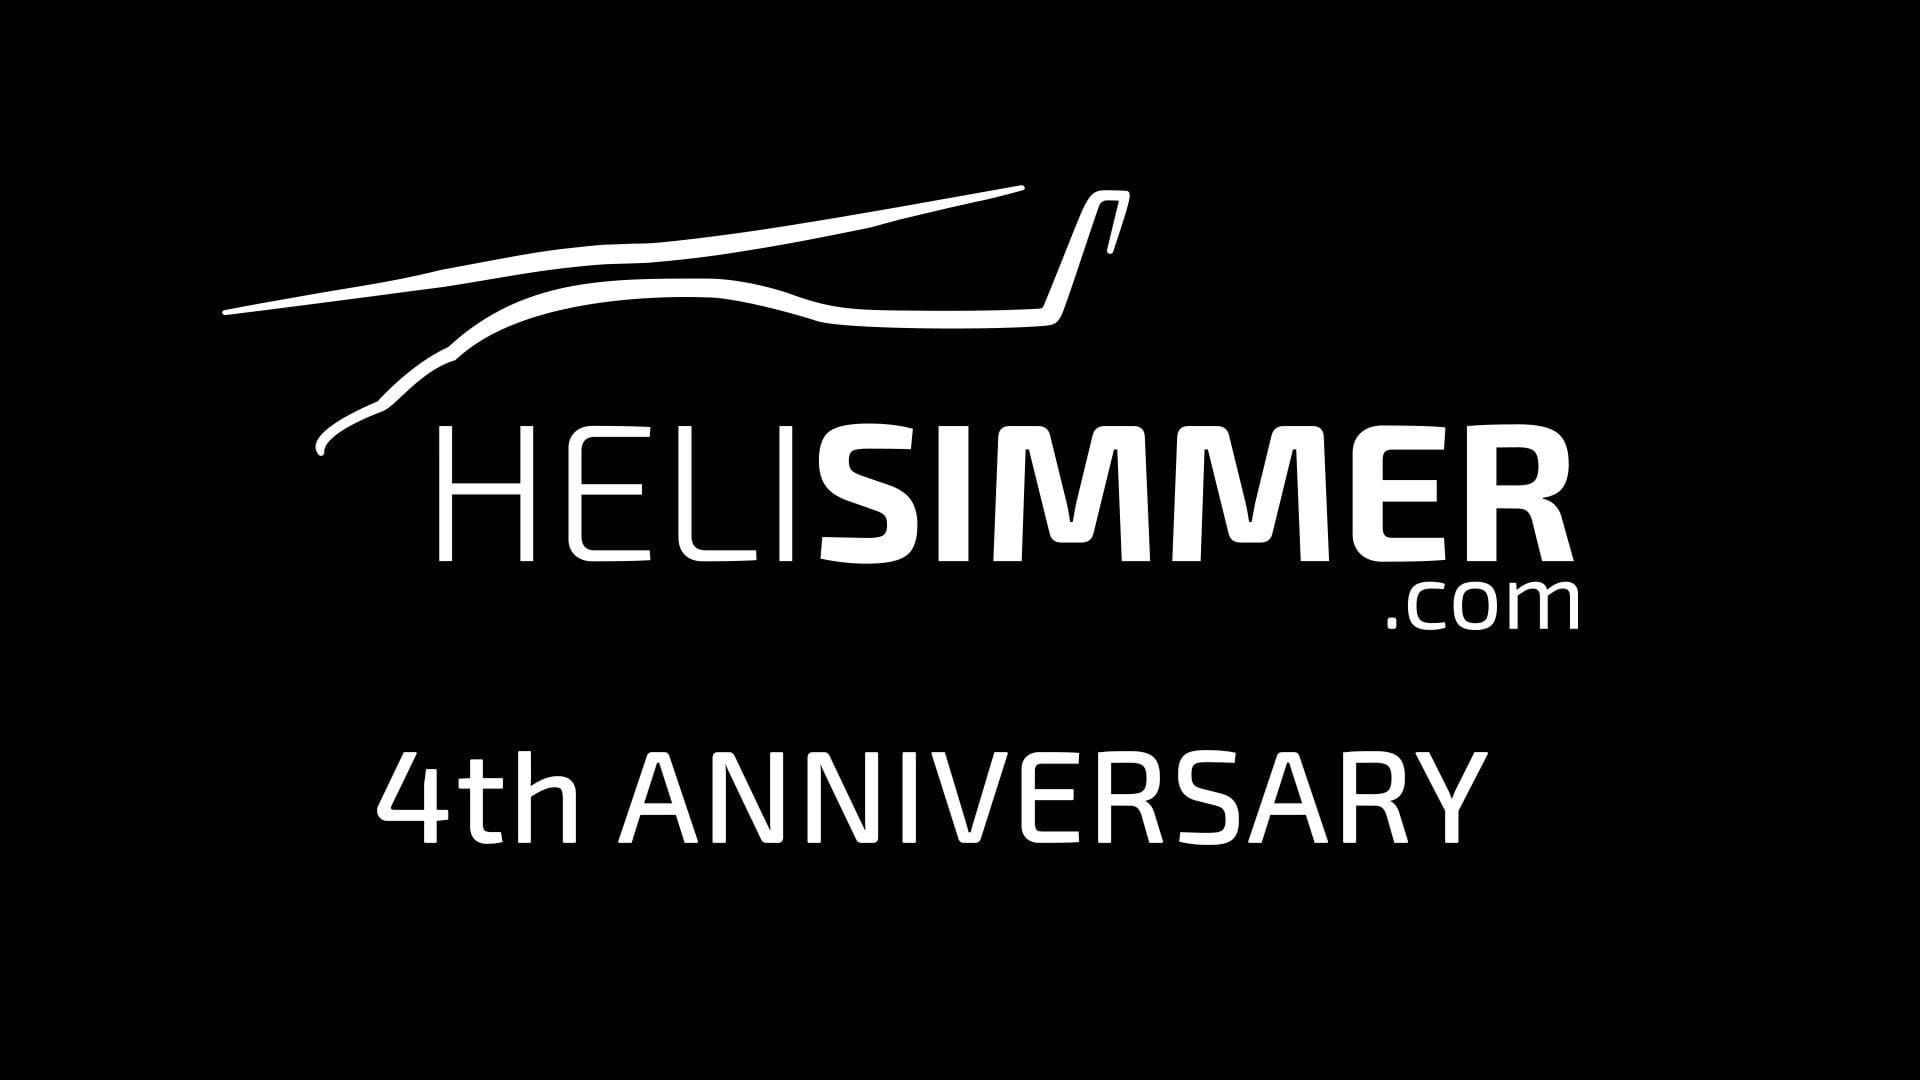 HeliSimmer.com's 4th anniversary!